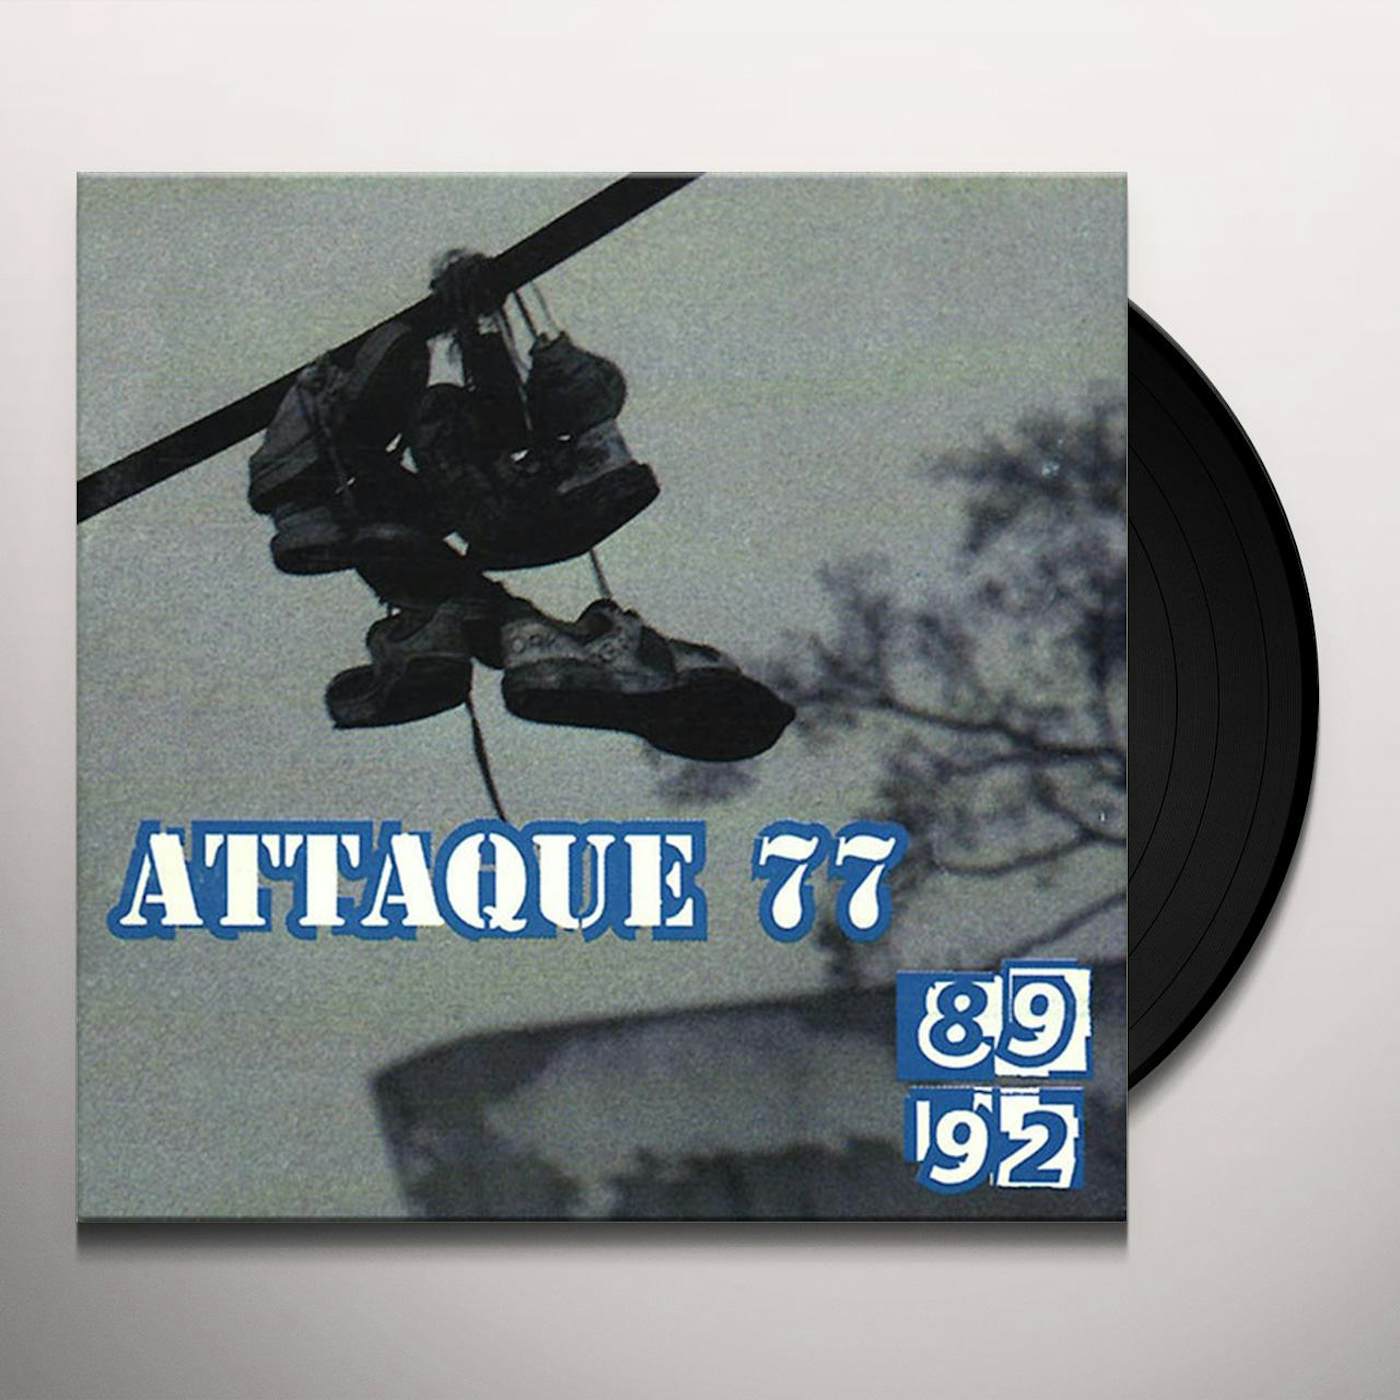 Attaque 77 89/92 Vinyl Record